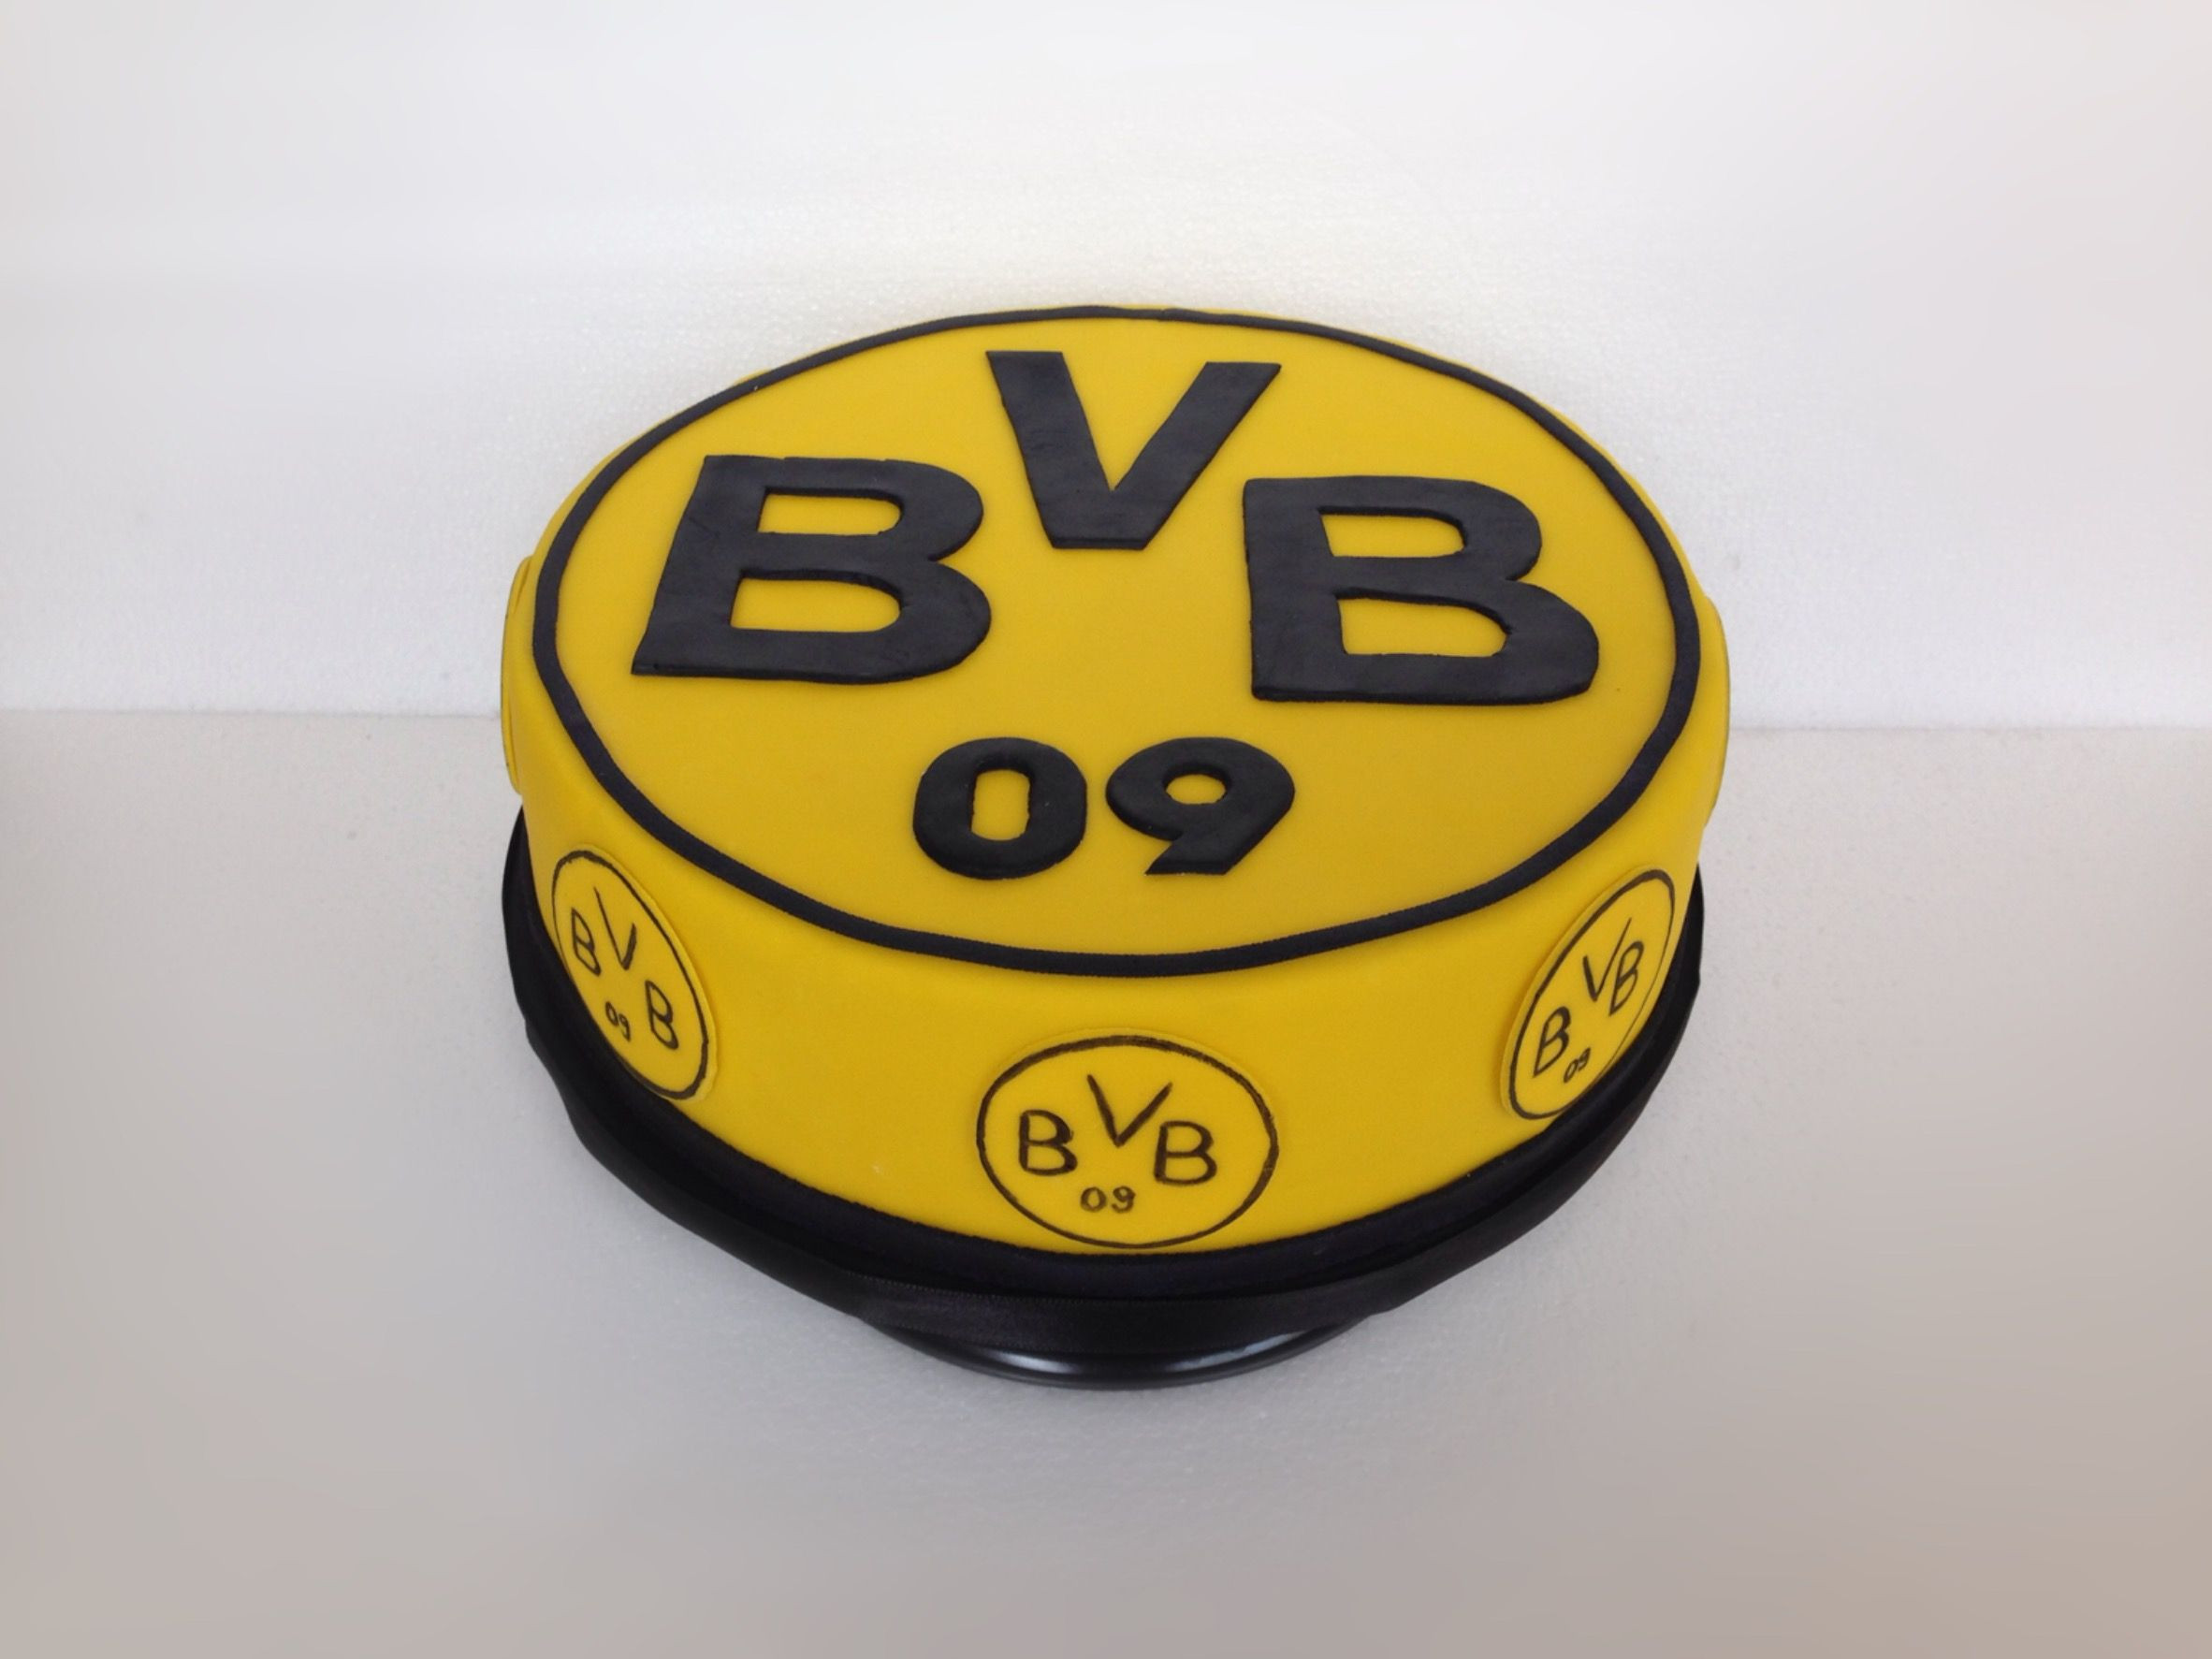 Bvb Geburtstagstorte
 BVB 09 Torte Motivtorte Fußball Borussia Dortmund